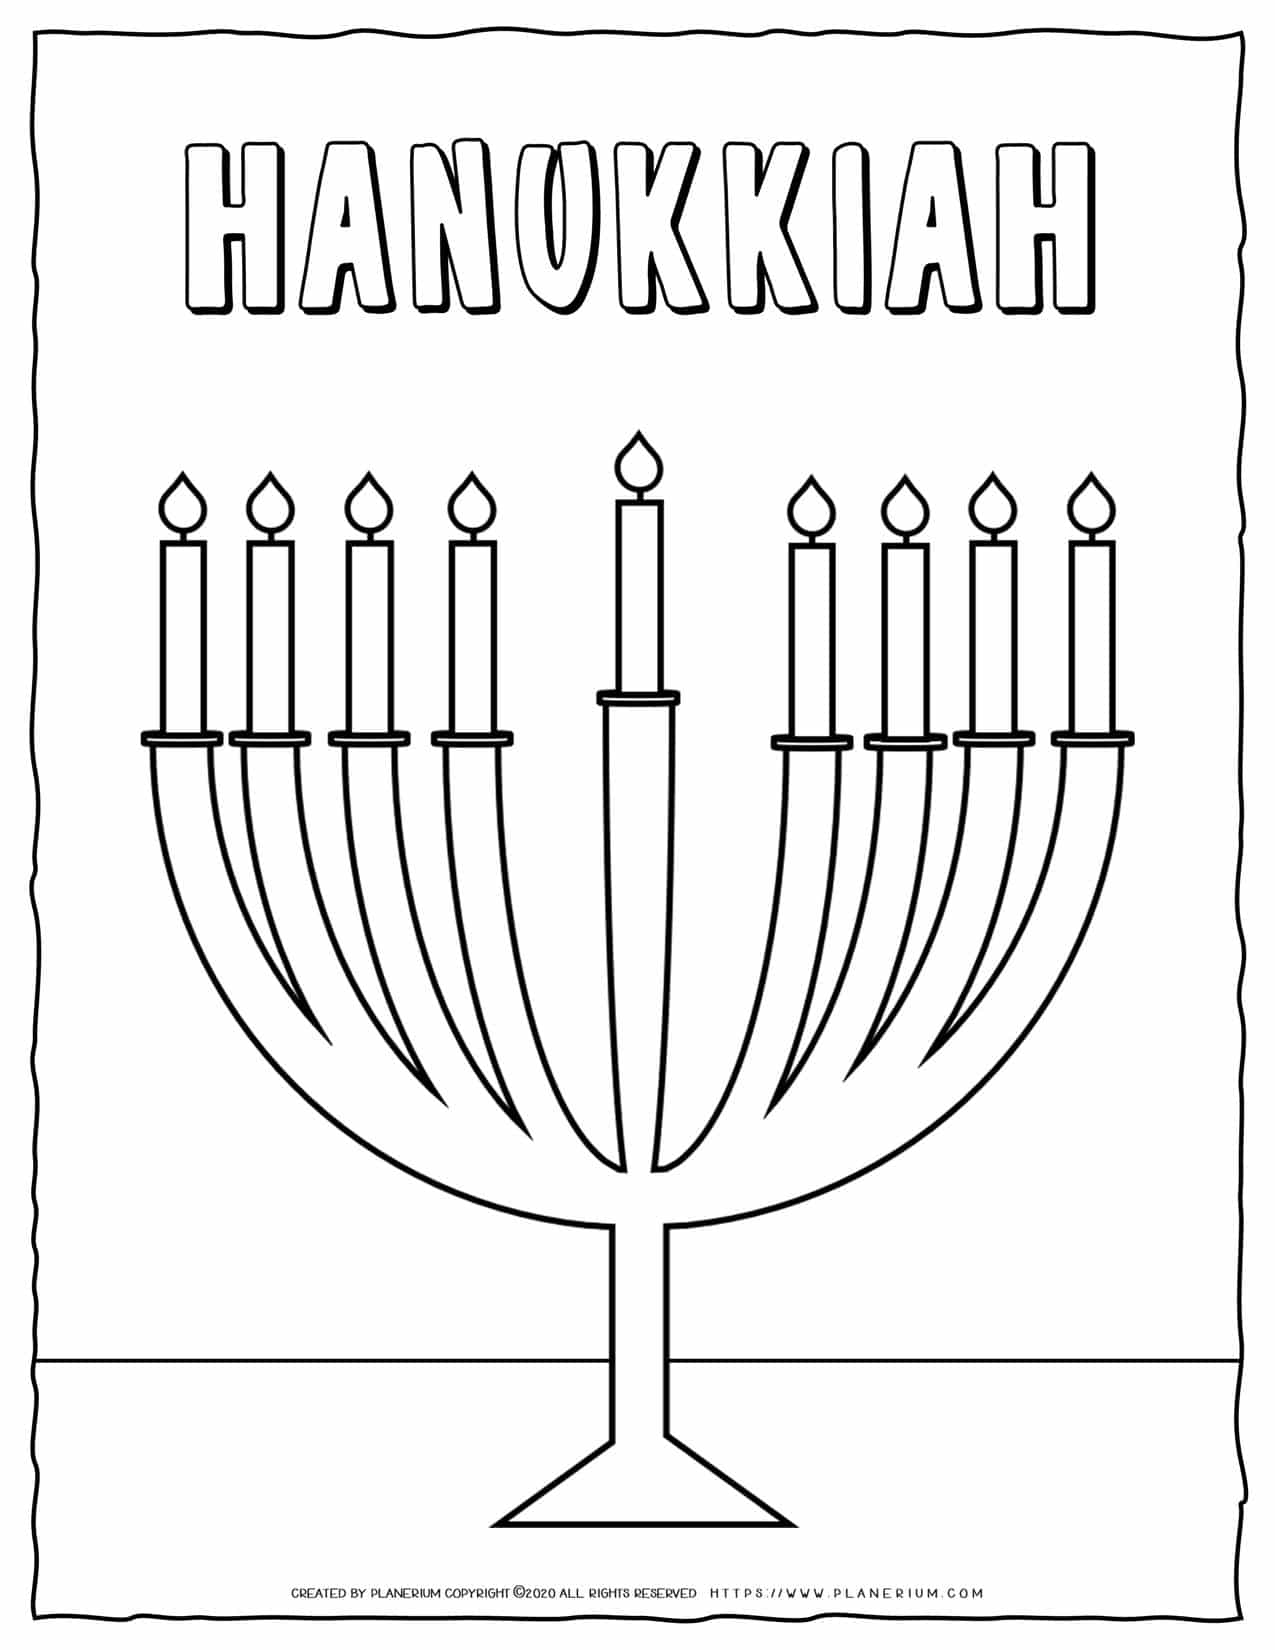 Hanukkah Menorah Coloring Page - FREE Printable | Planerium